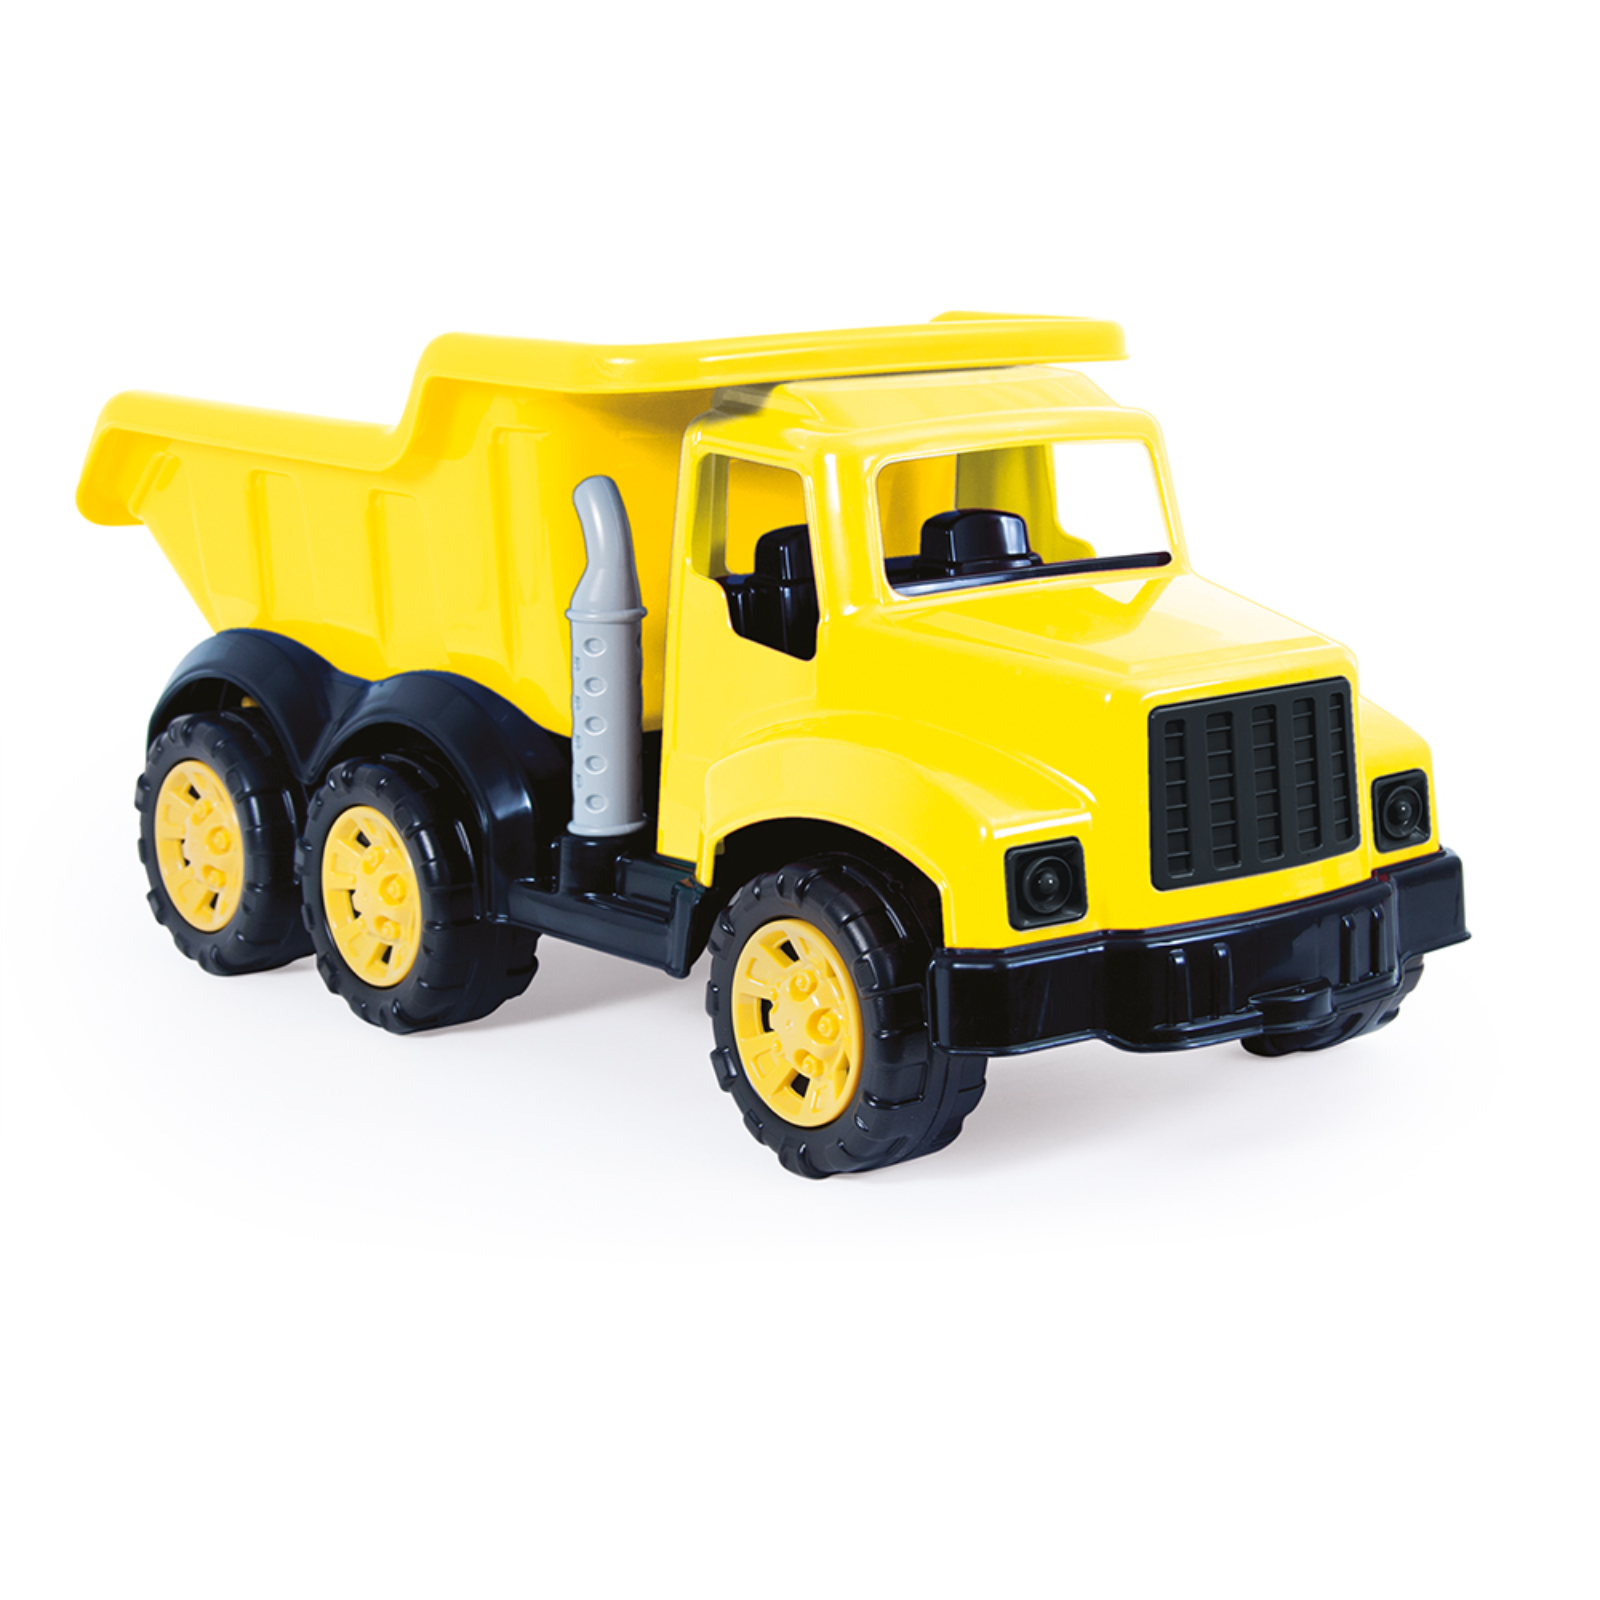 Giant (83cm) Construction Dump Truck - Yellow (3 - 6 Years)